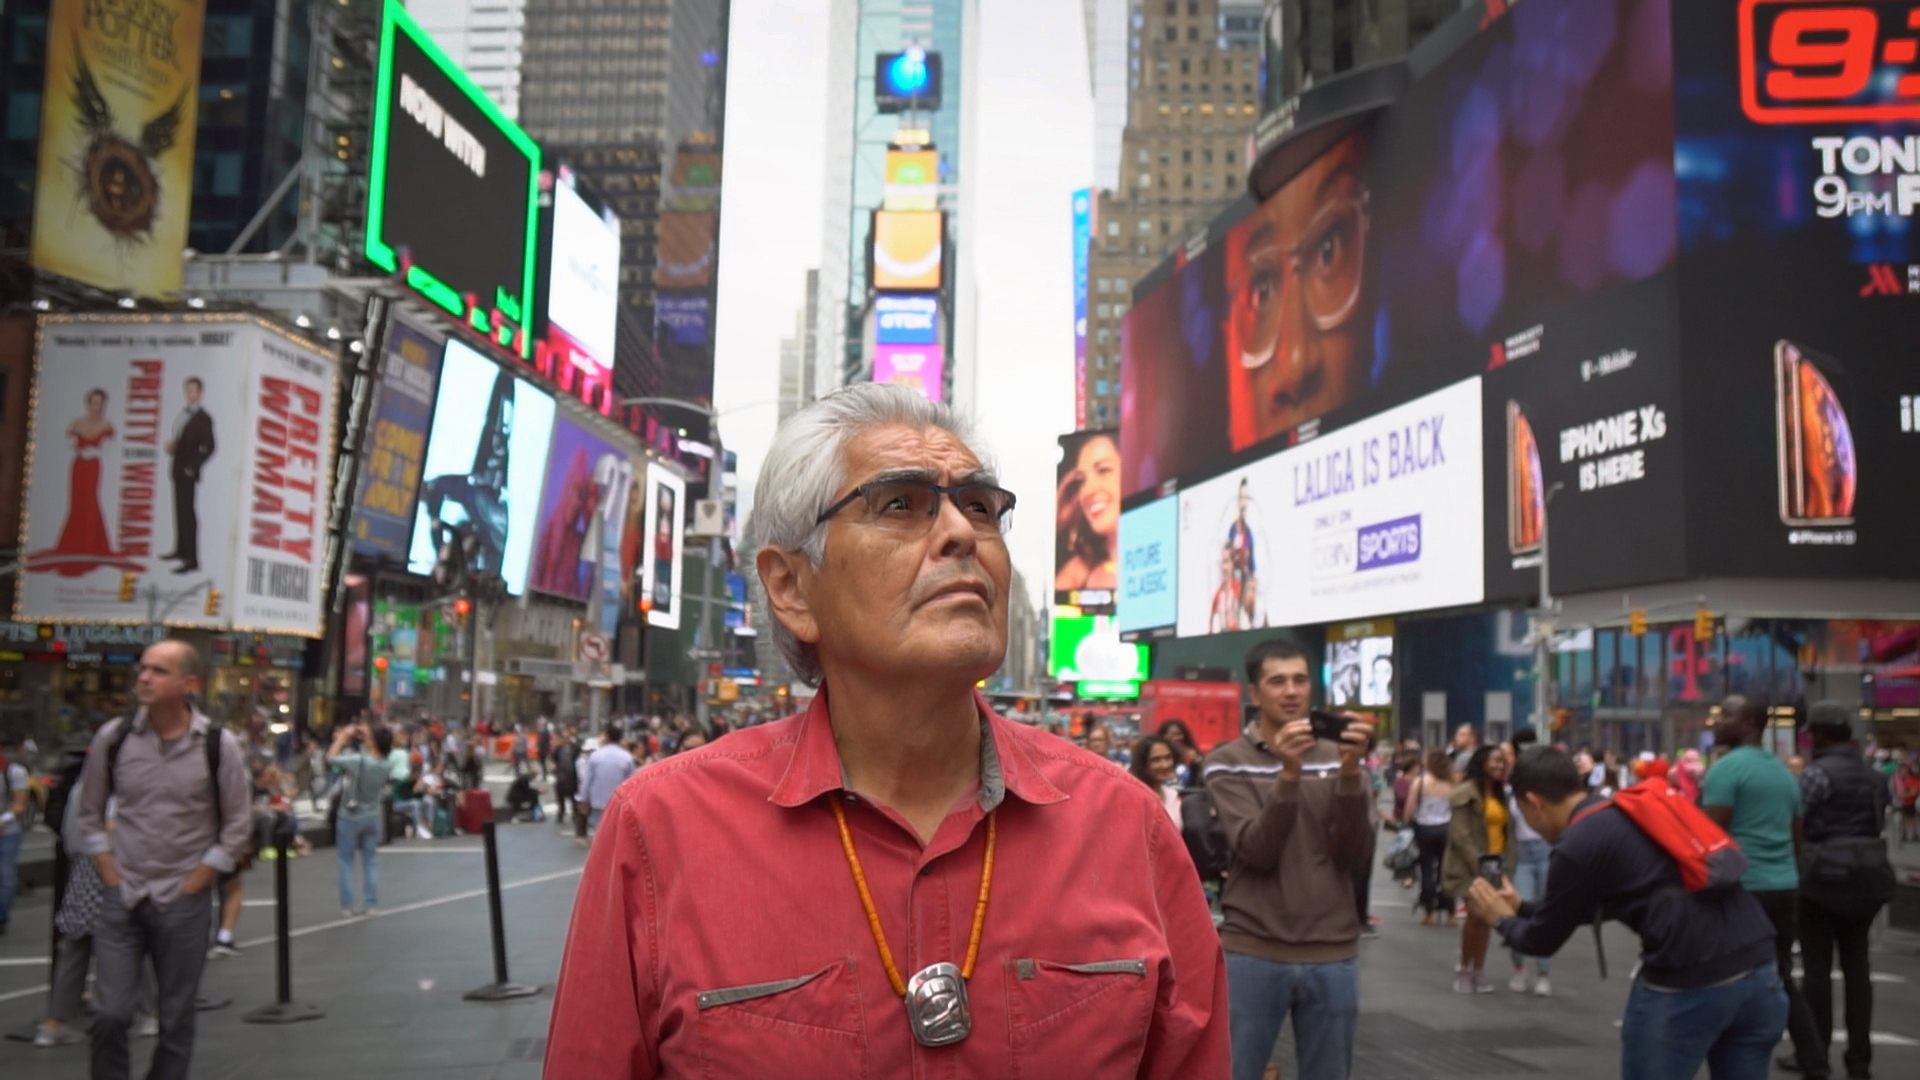 Robert Davidson Haida Modern Times Square